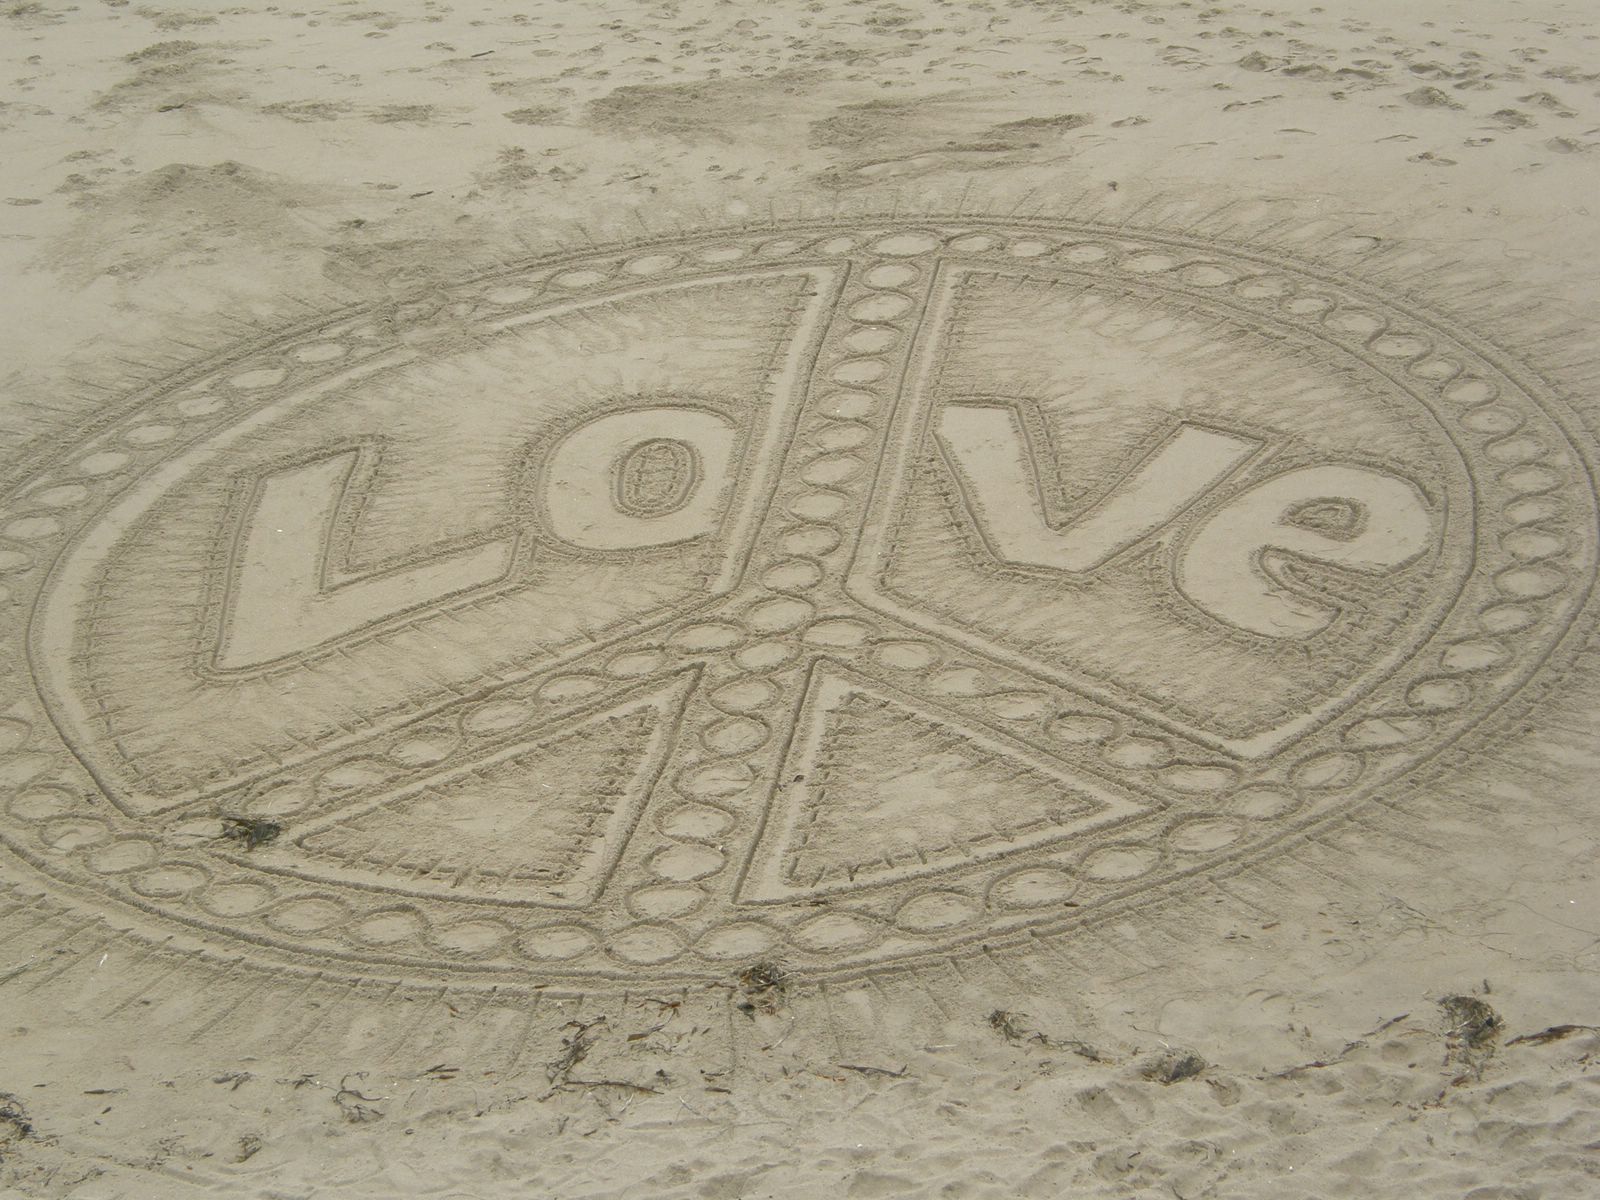 Artistic Love on the Beach